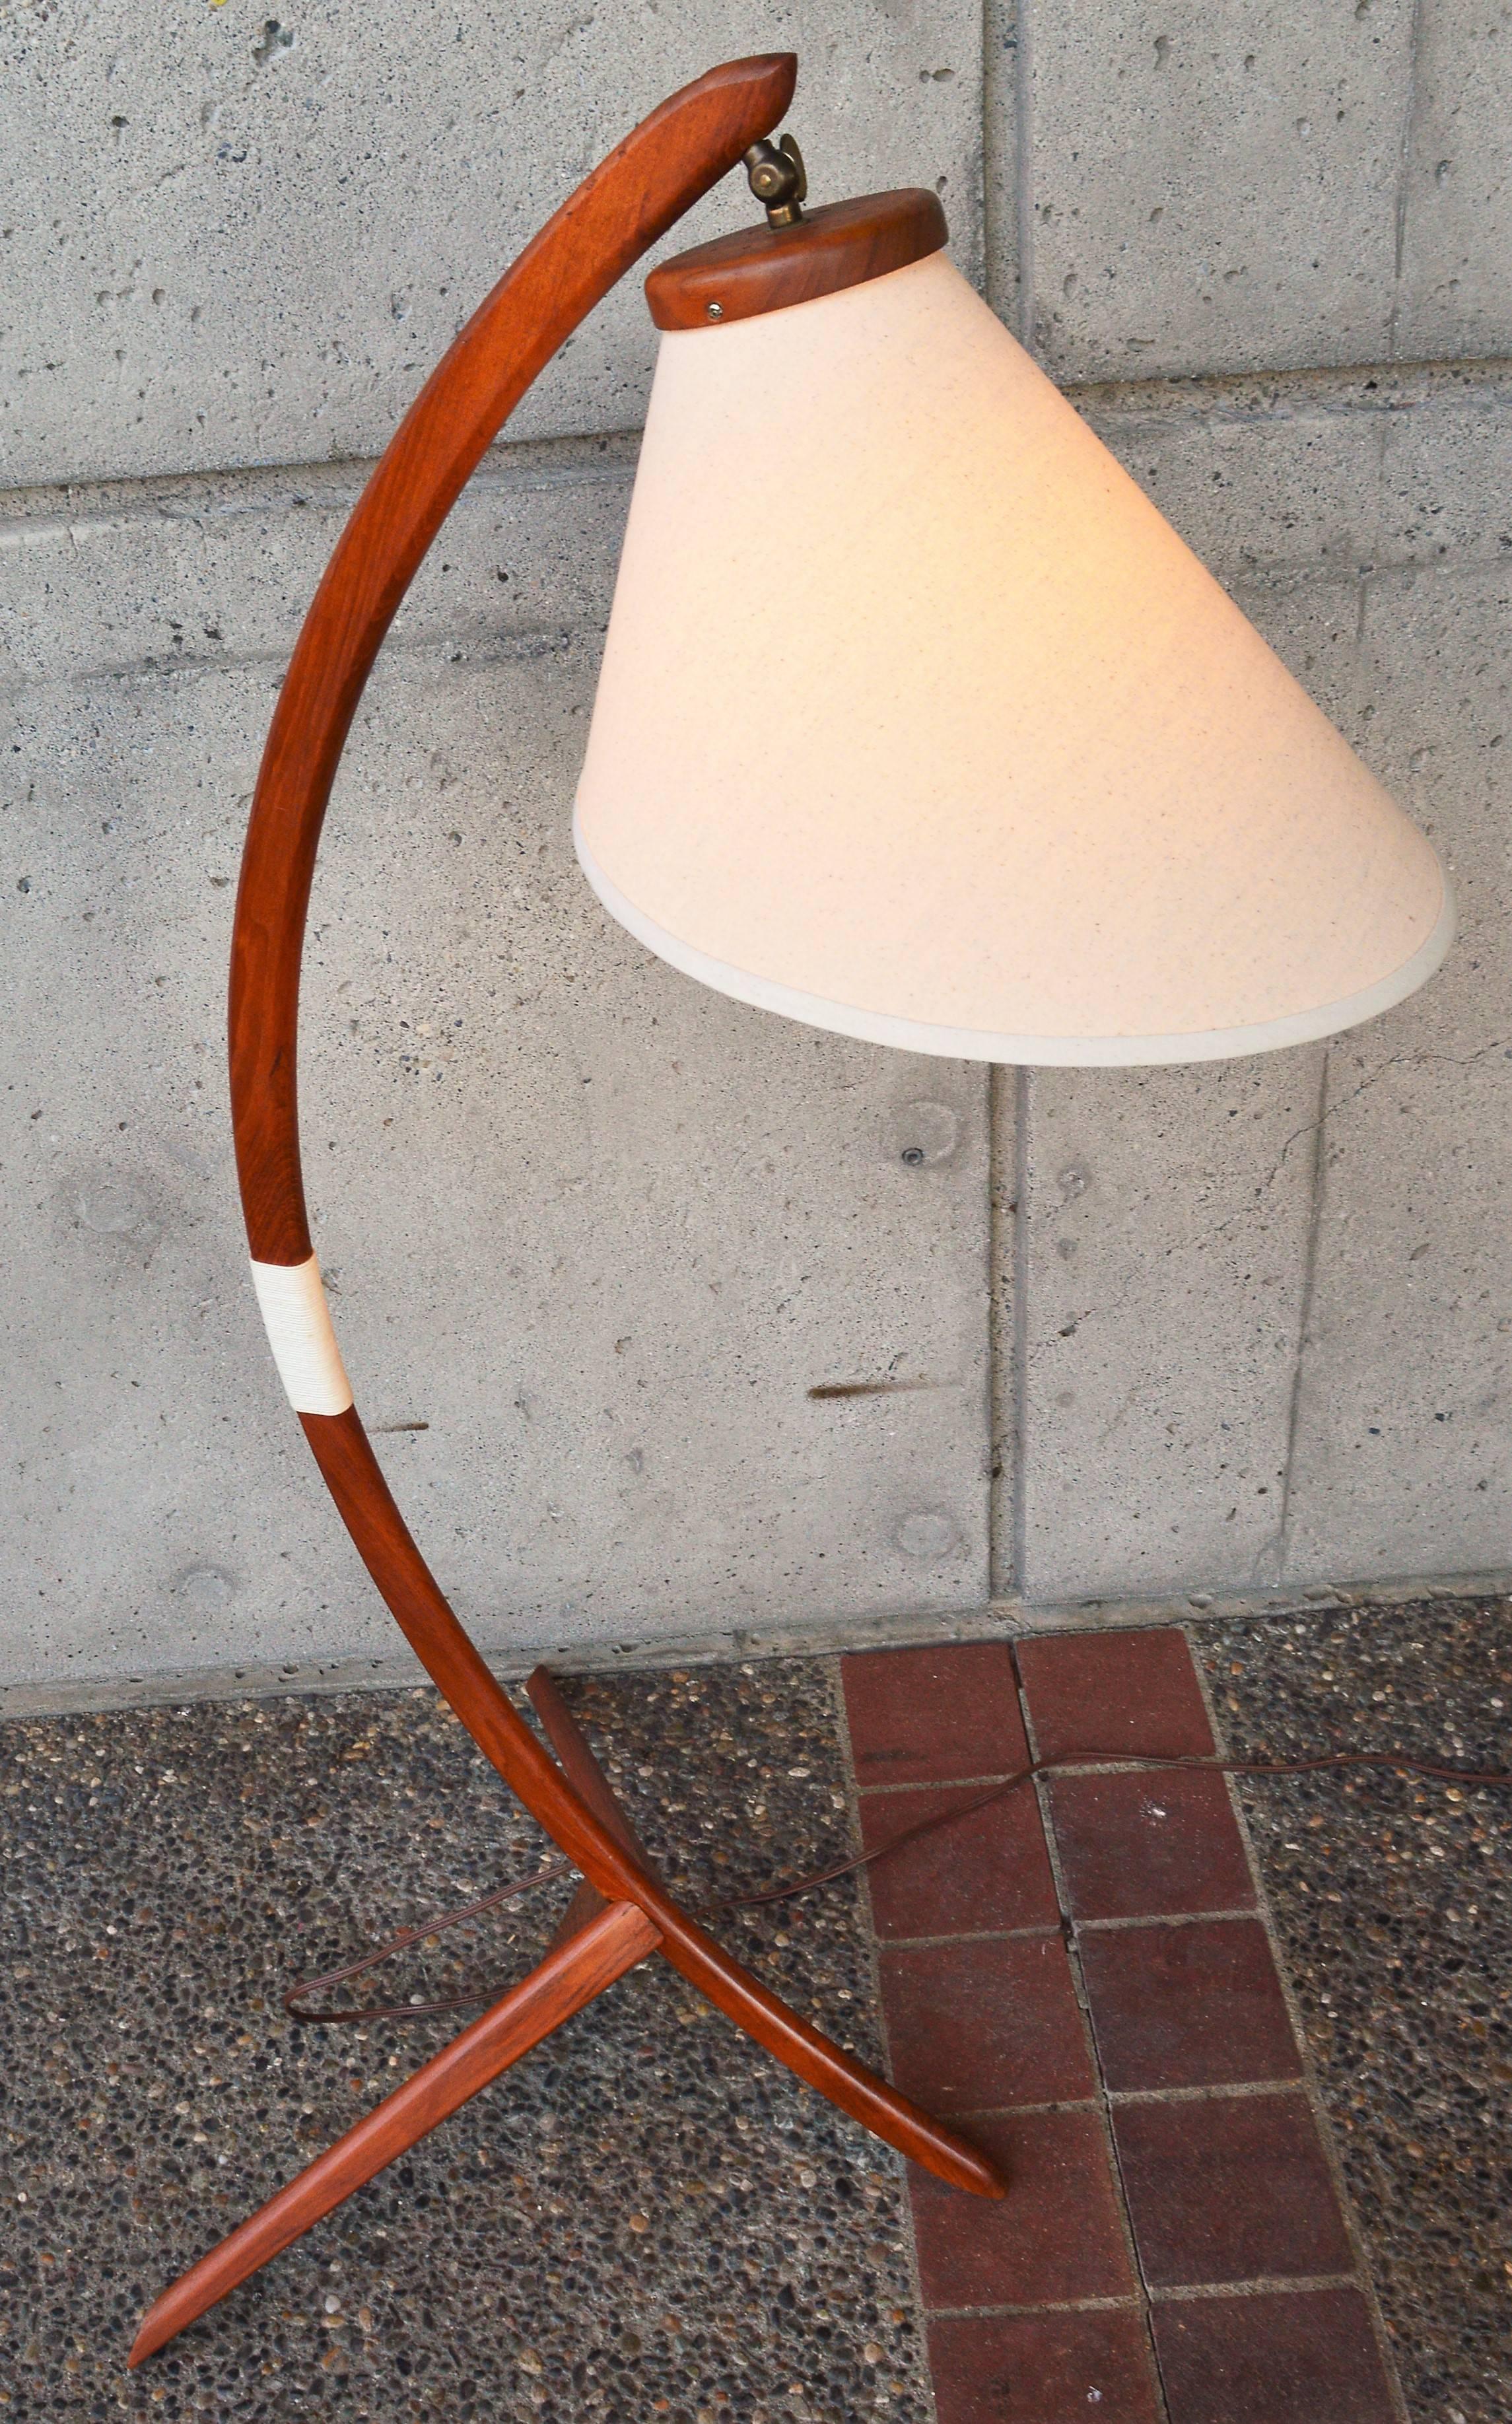 Danish Teak Arc or Bow Tripod Floor Lamp with New Bonnet Shade, Rispal Style 1